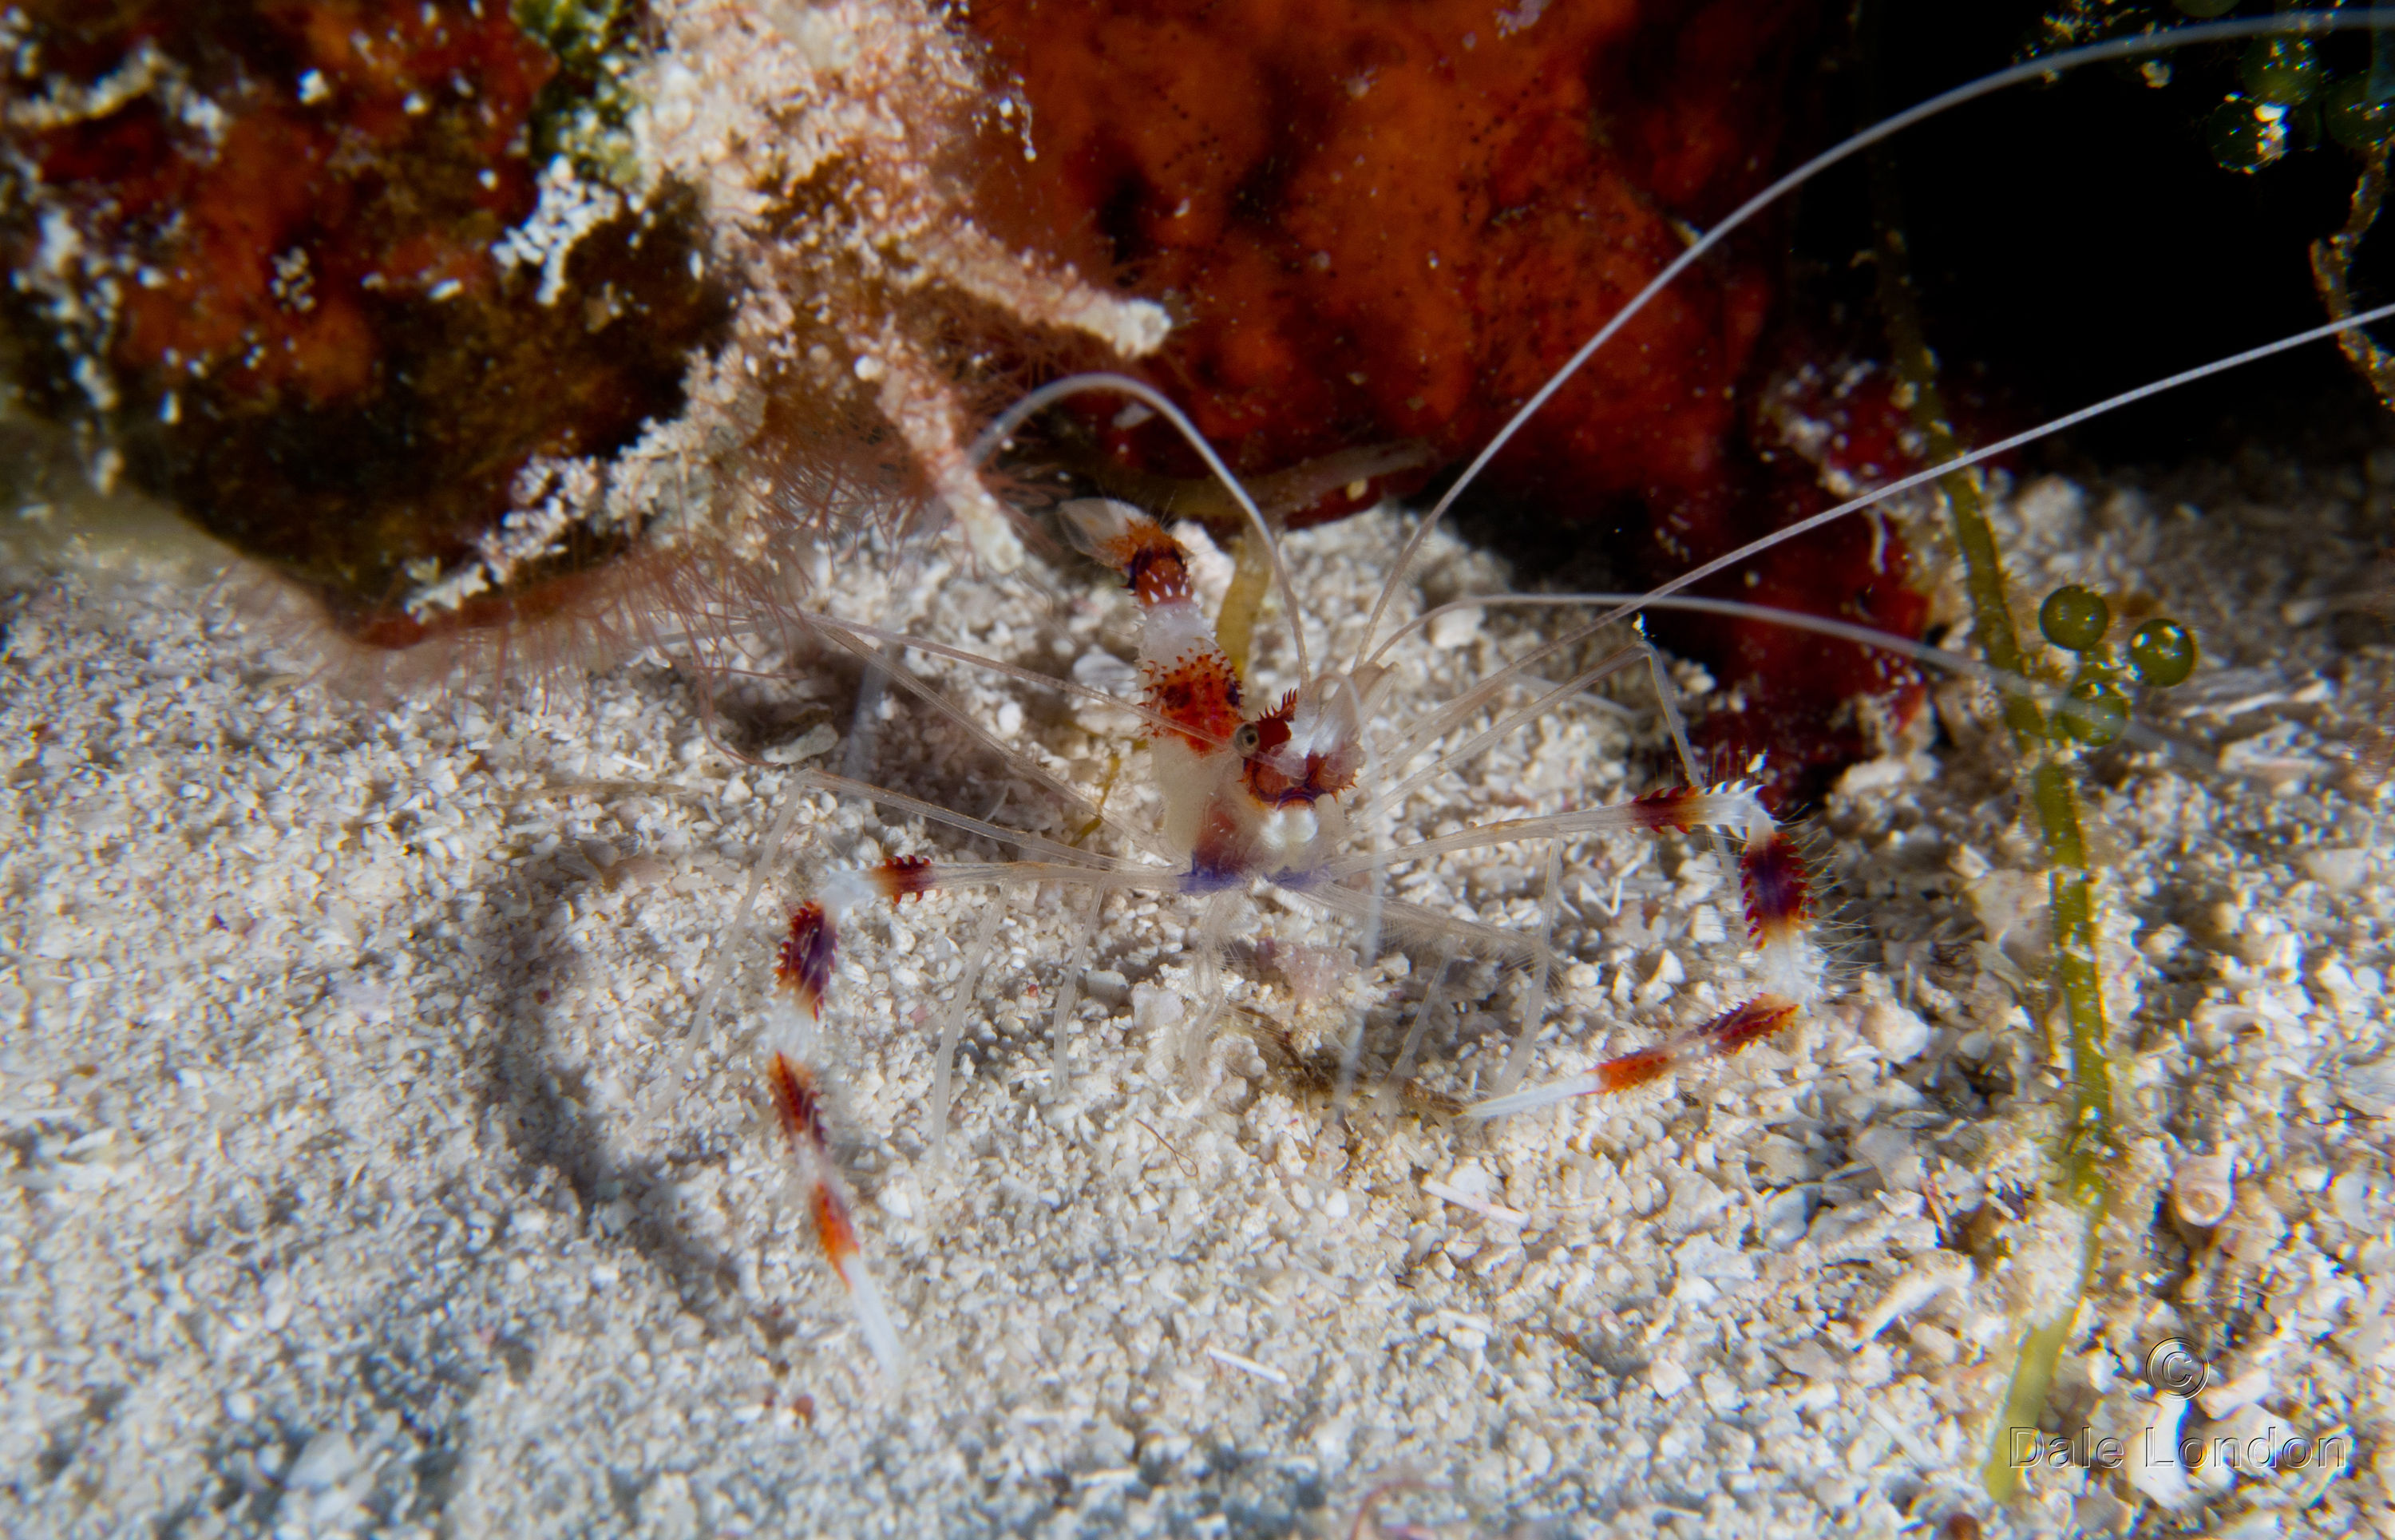 Cozumel May 2014 Banded coral shrimp